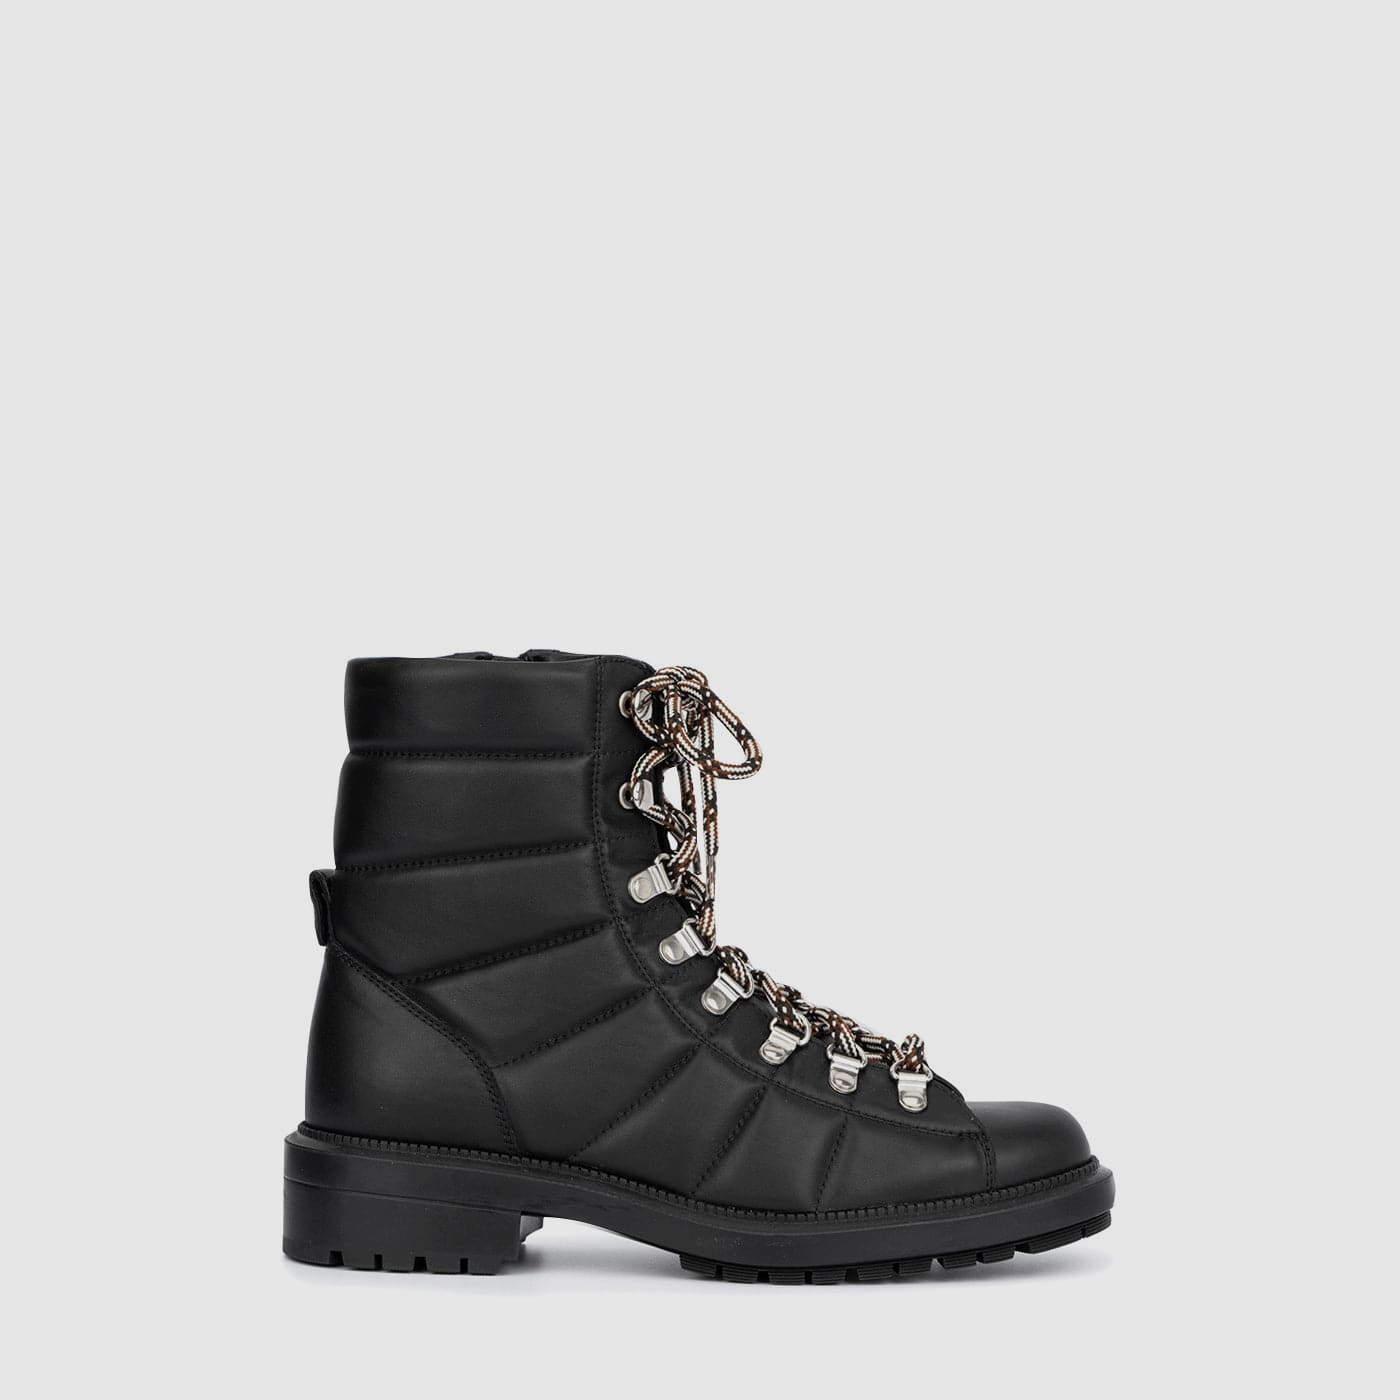 Chanel Black/White Leather Lace Up AnkleBoots Size EU 38 US 8 UK 5 AU 7